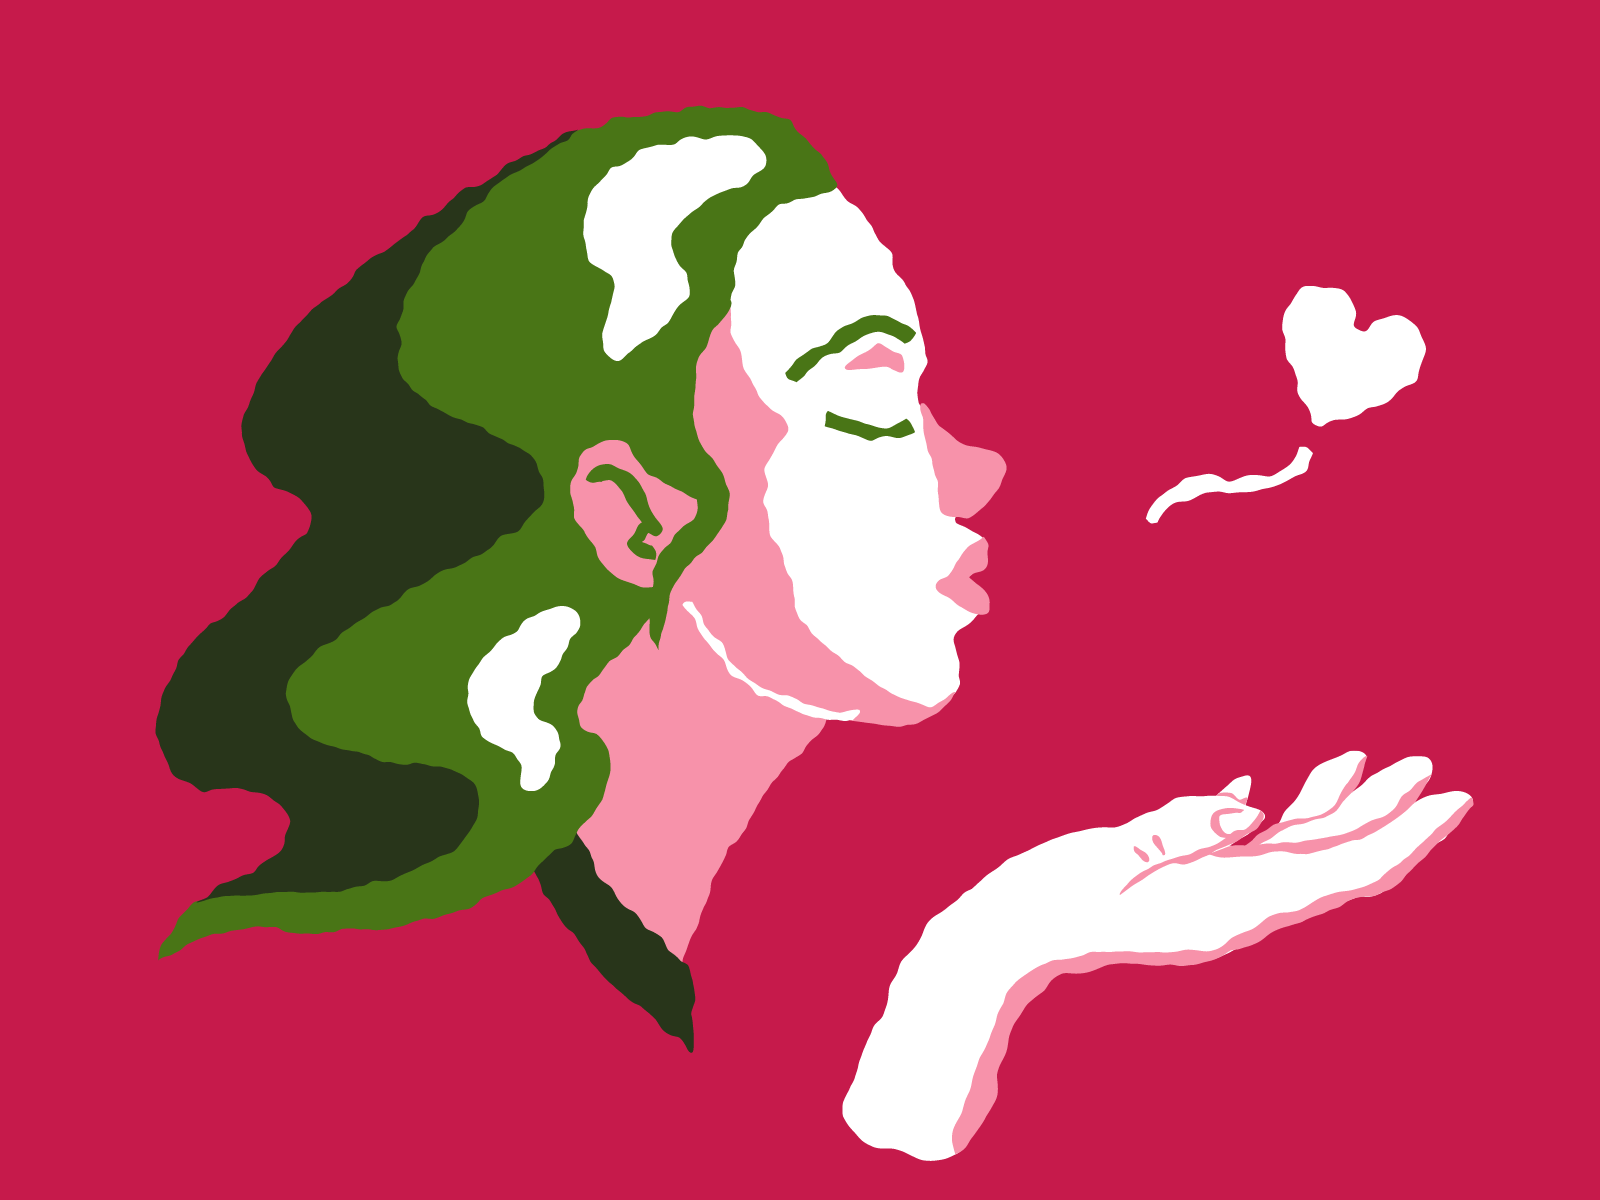 Kiss kiss icons8 vector art illustration digital art